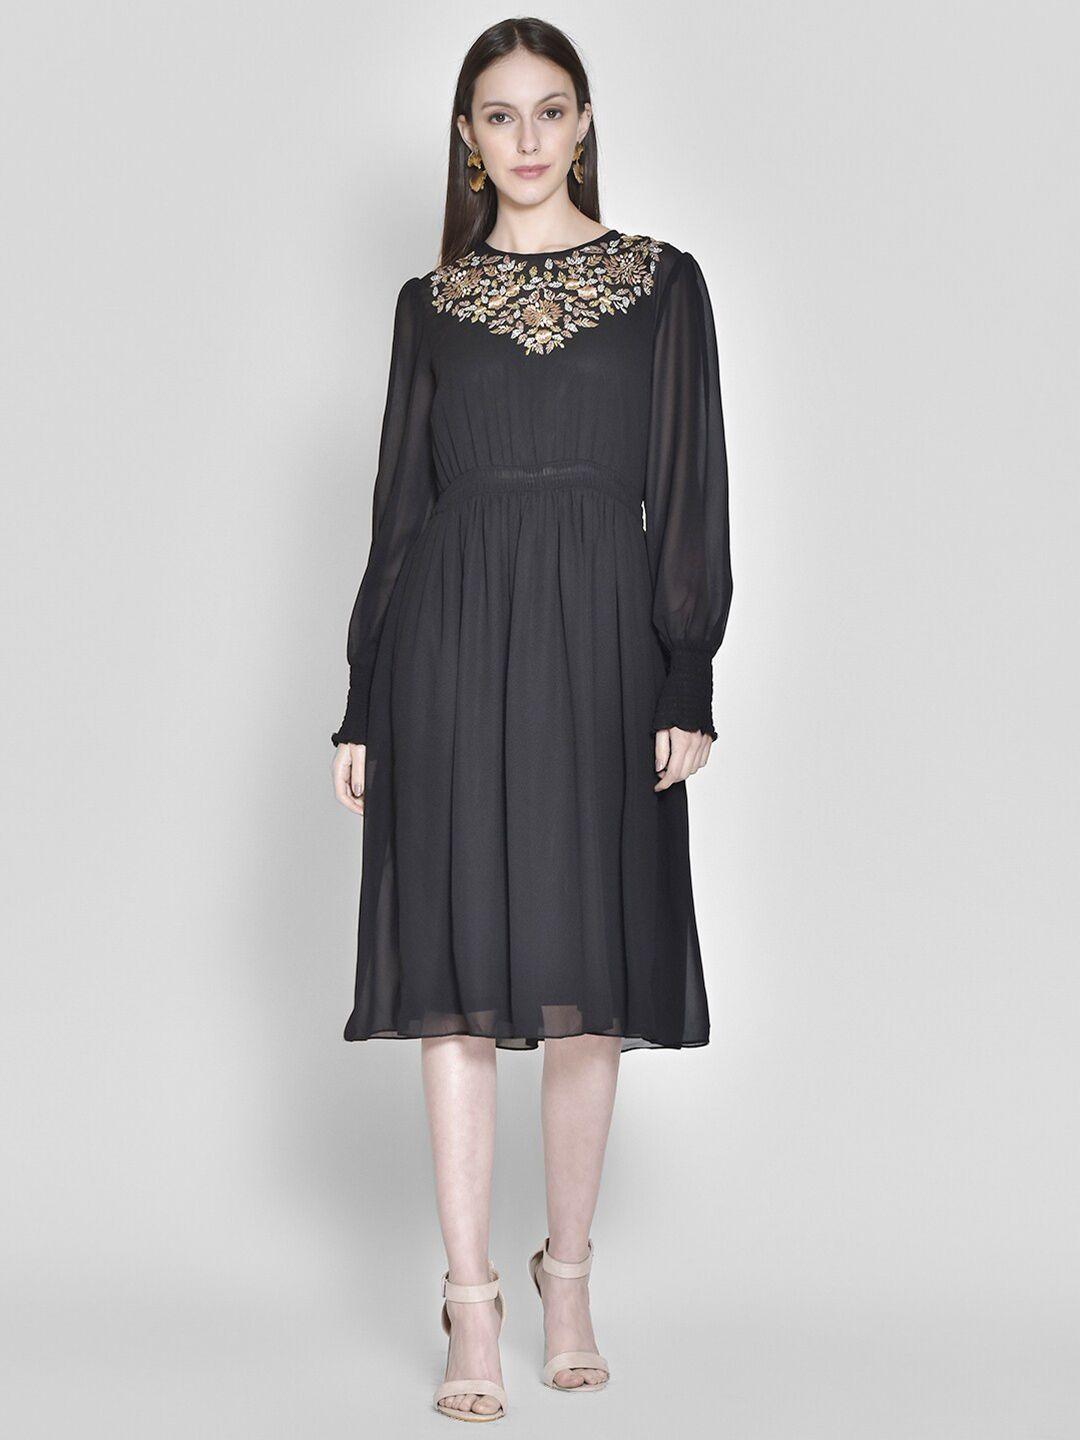 250 designs women black floral embroidered georgette dress